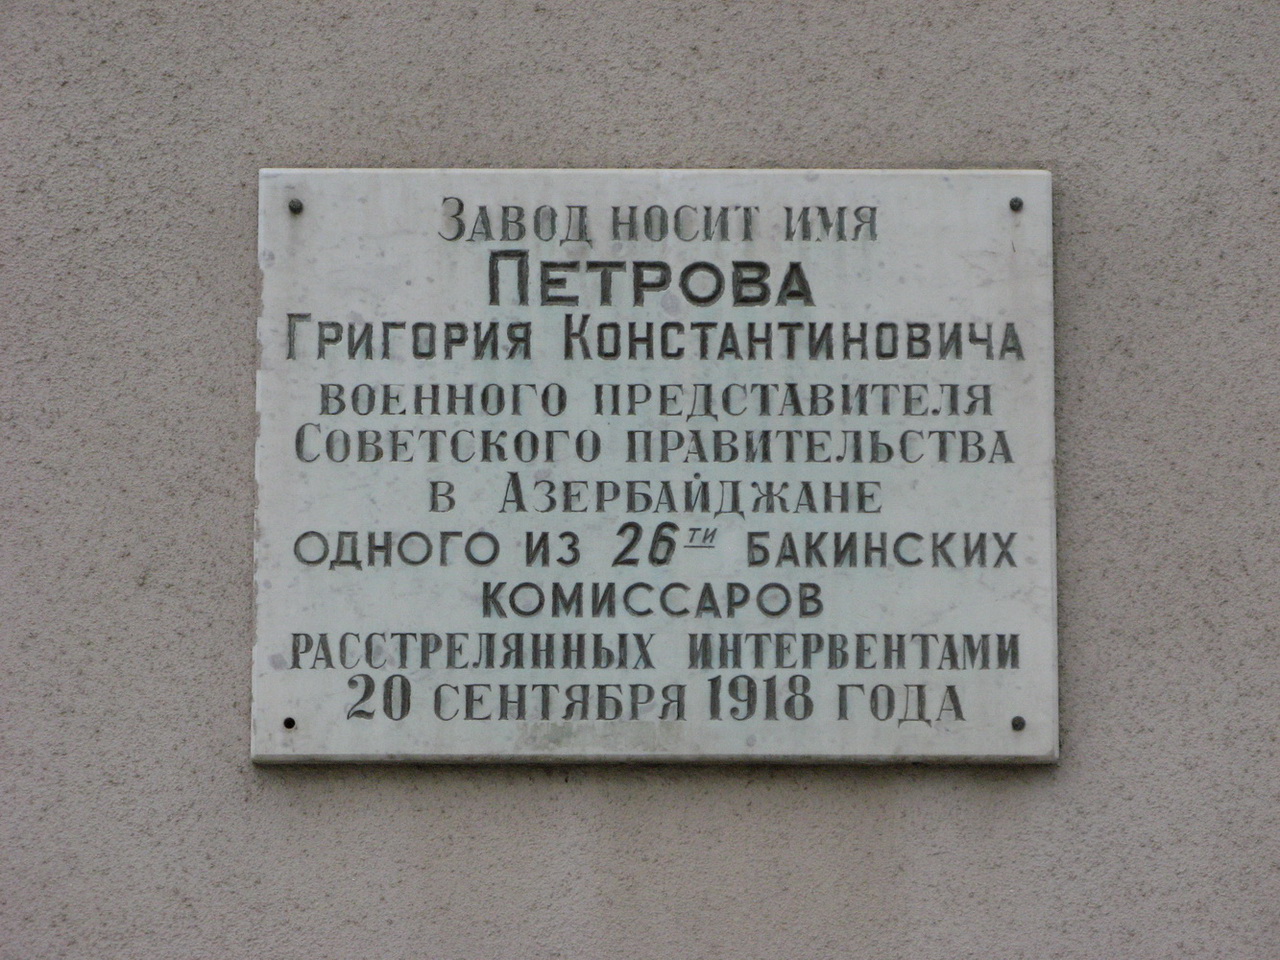 Wołgograd, Электролесовская улица, 45 корп. 9. Wołgograd — Memorial plaques